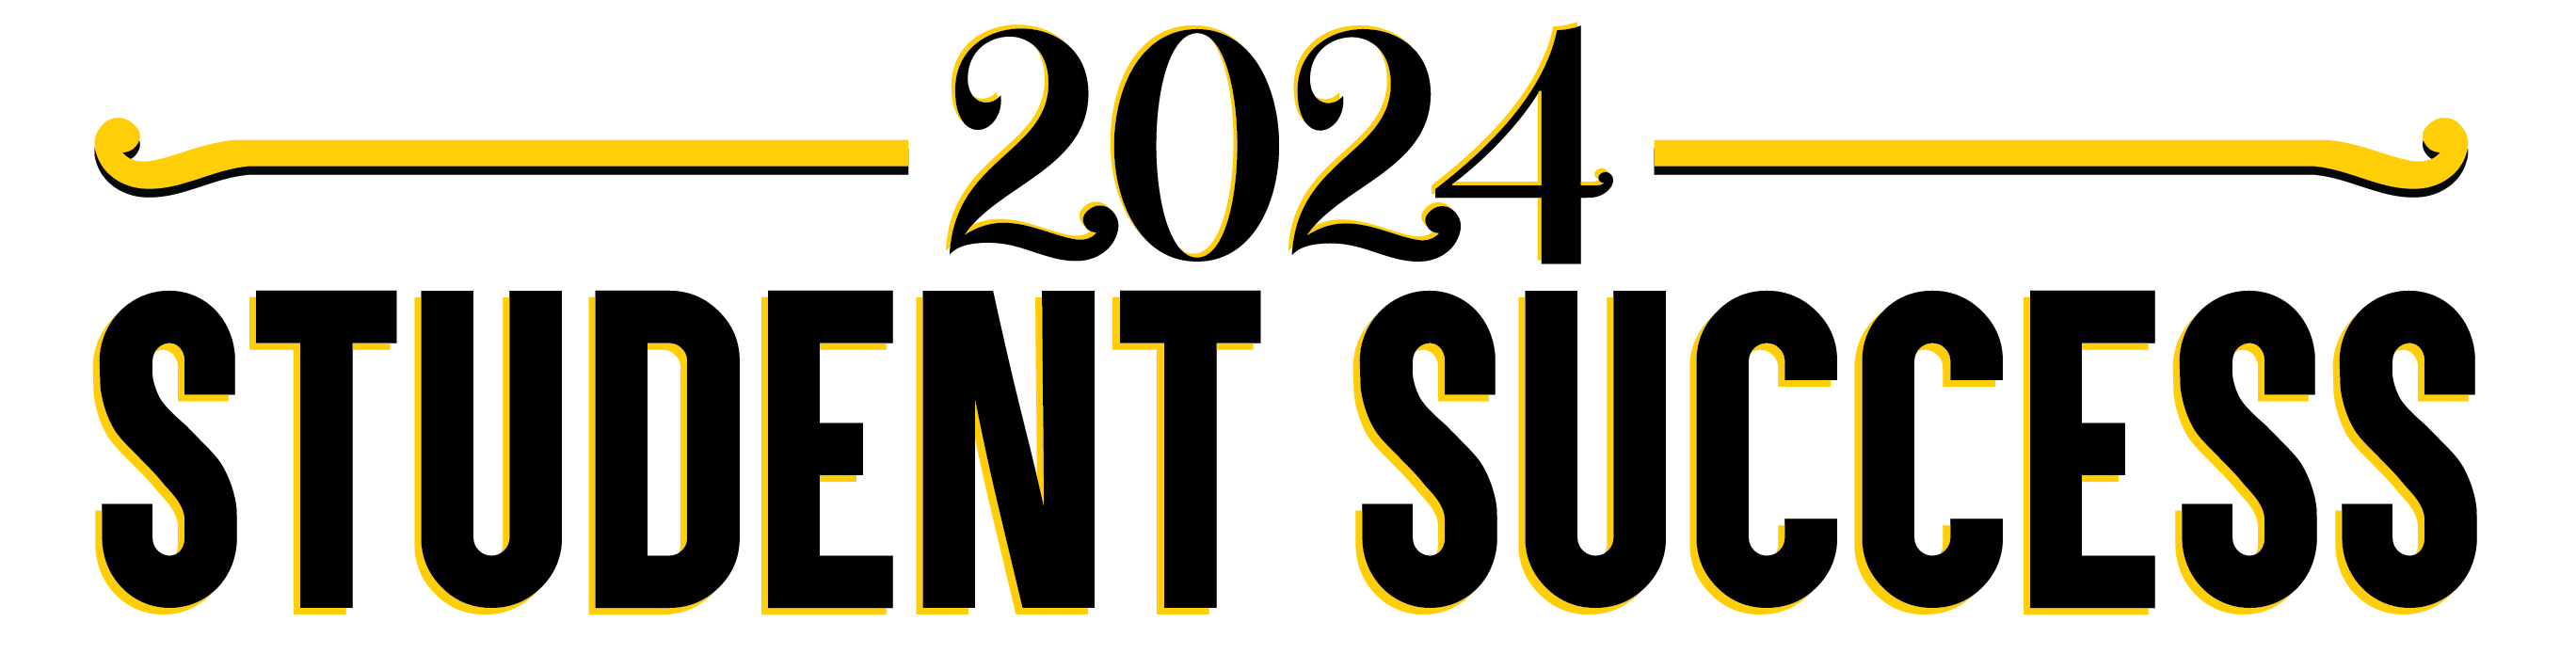 Student Success Banner 2024